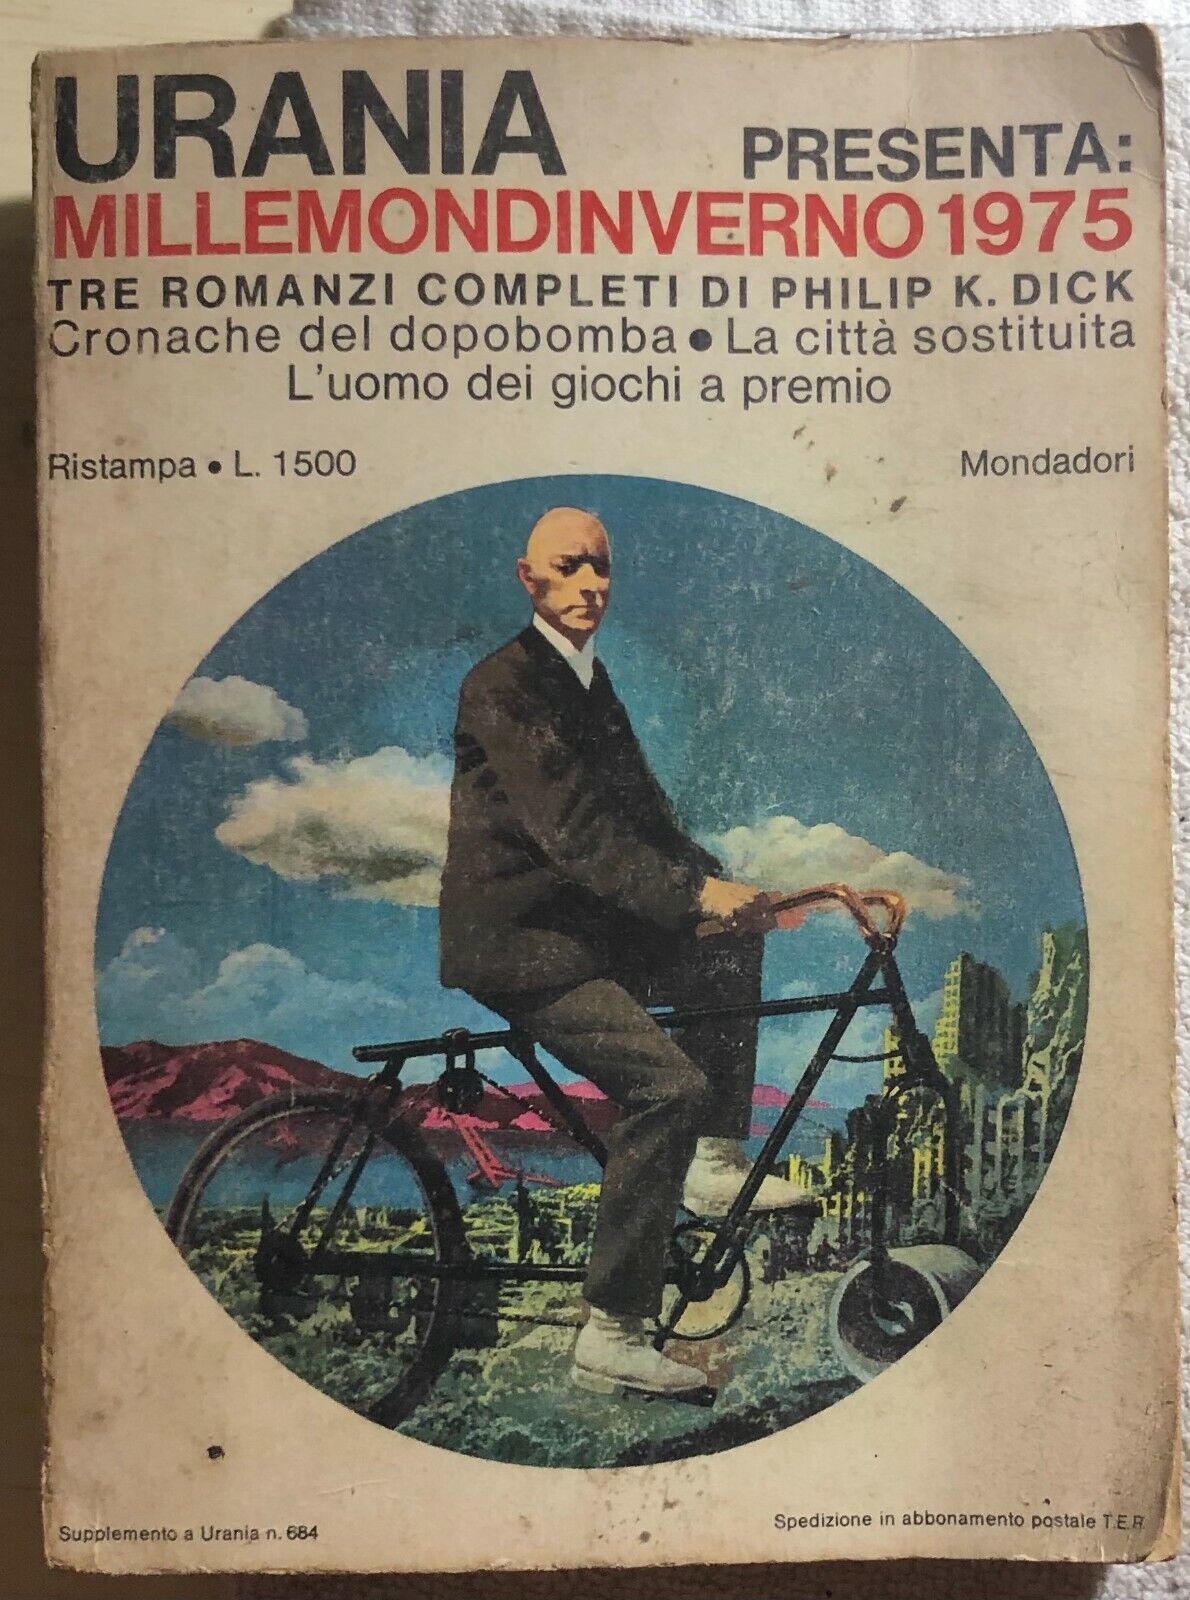 Millemondinverno 1975 di Philip K. Dick,  1975,  Mondadori